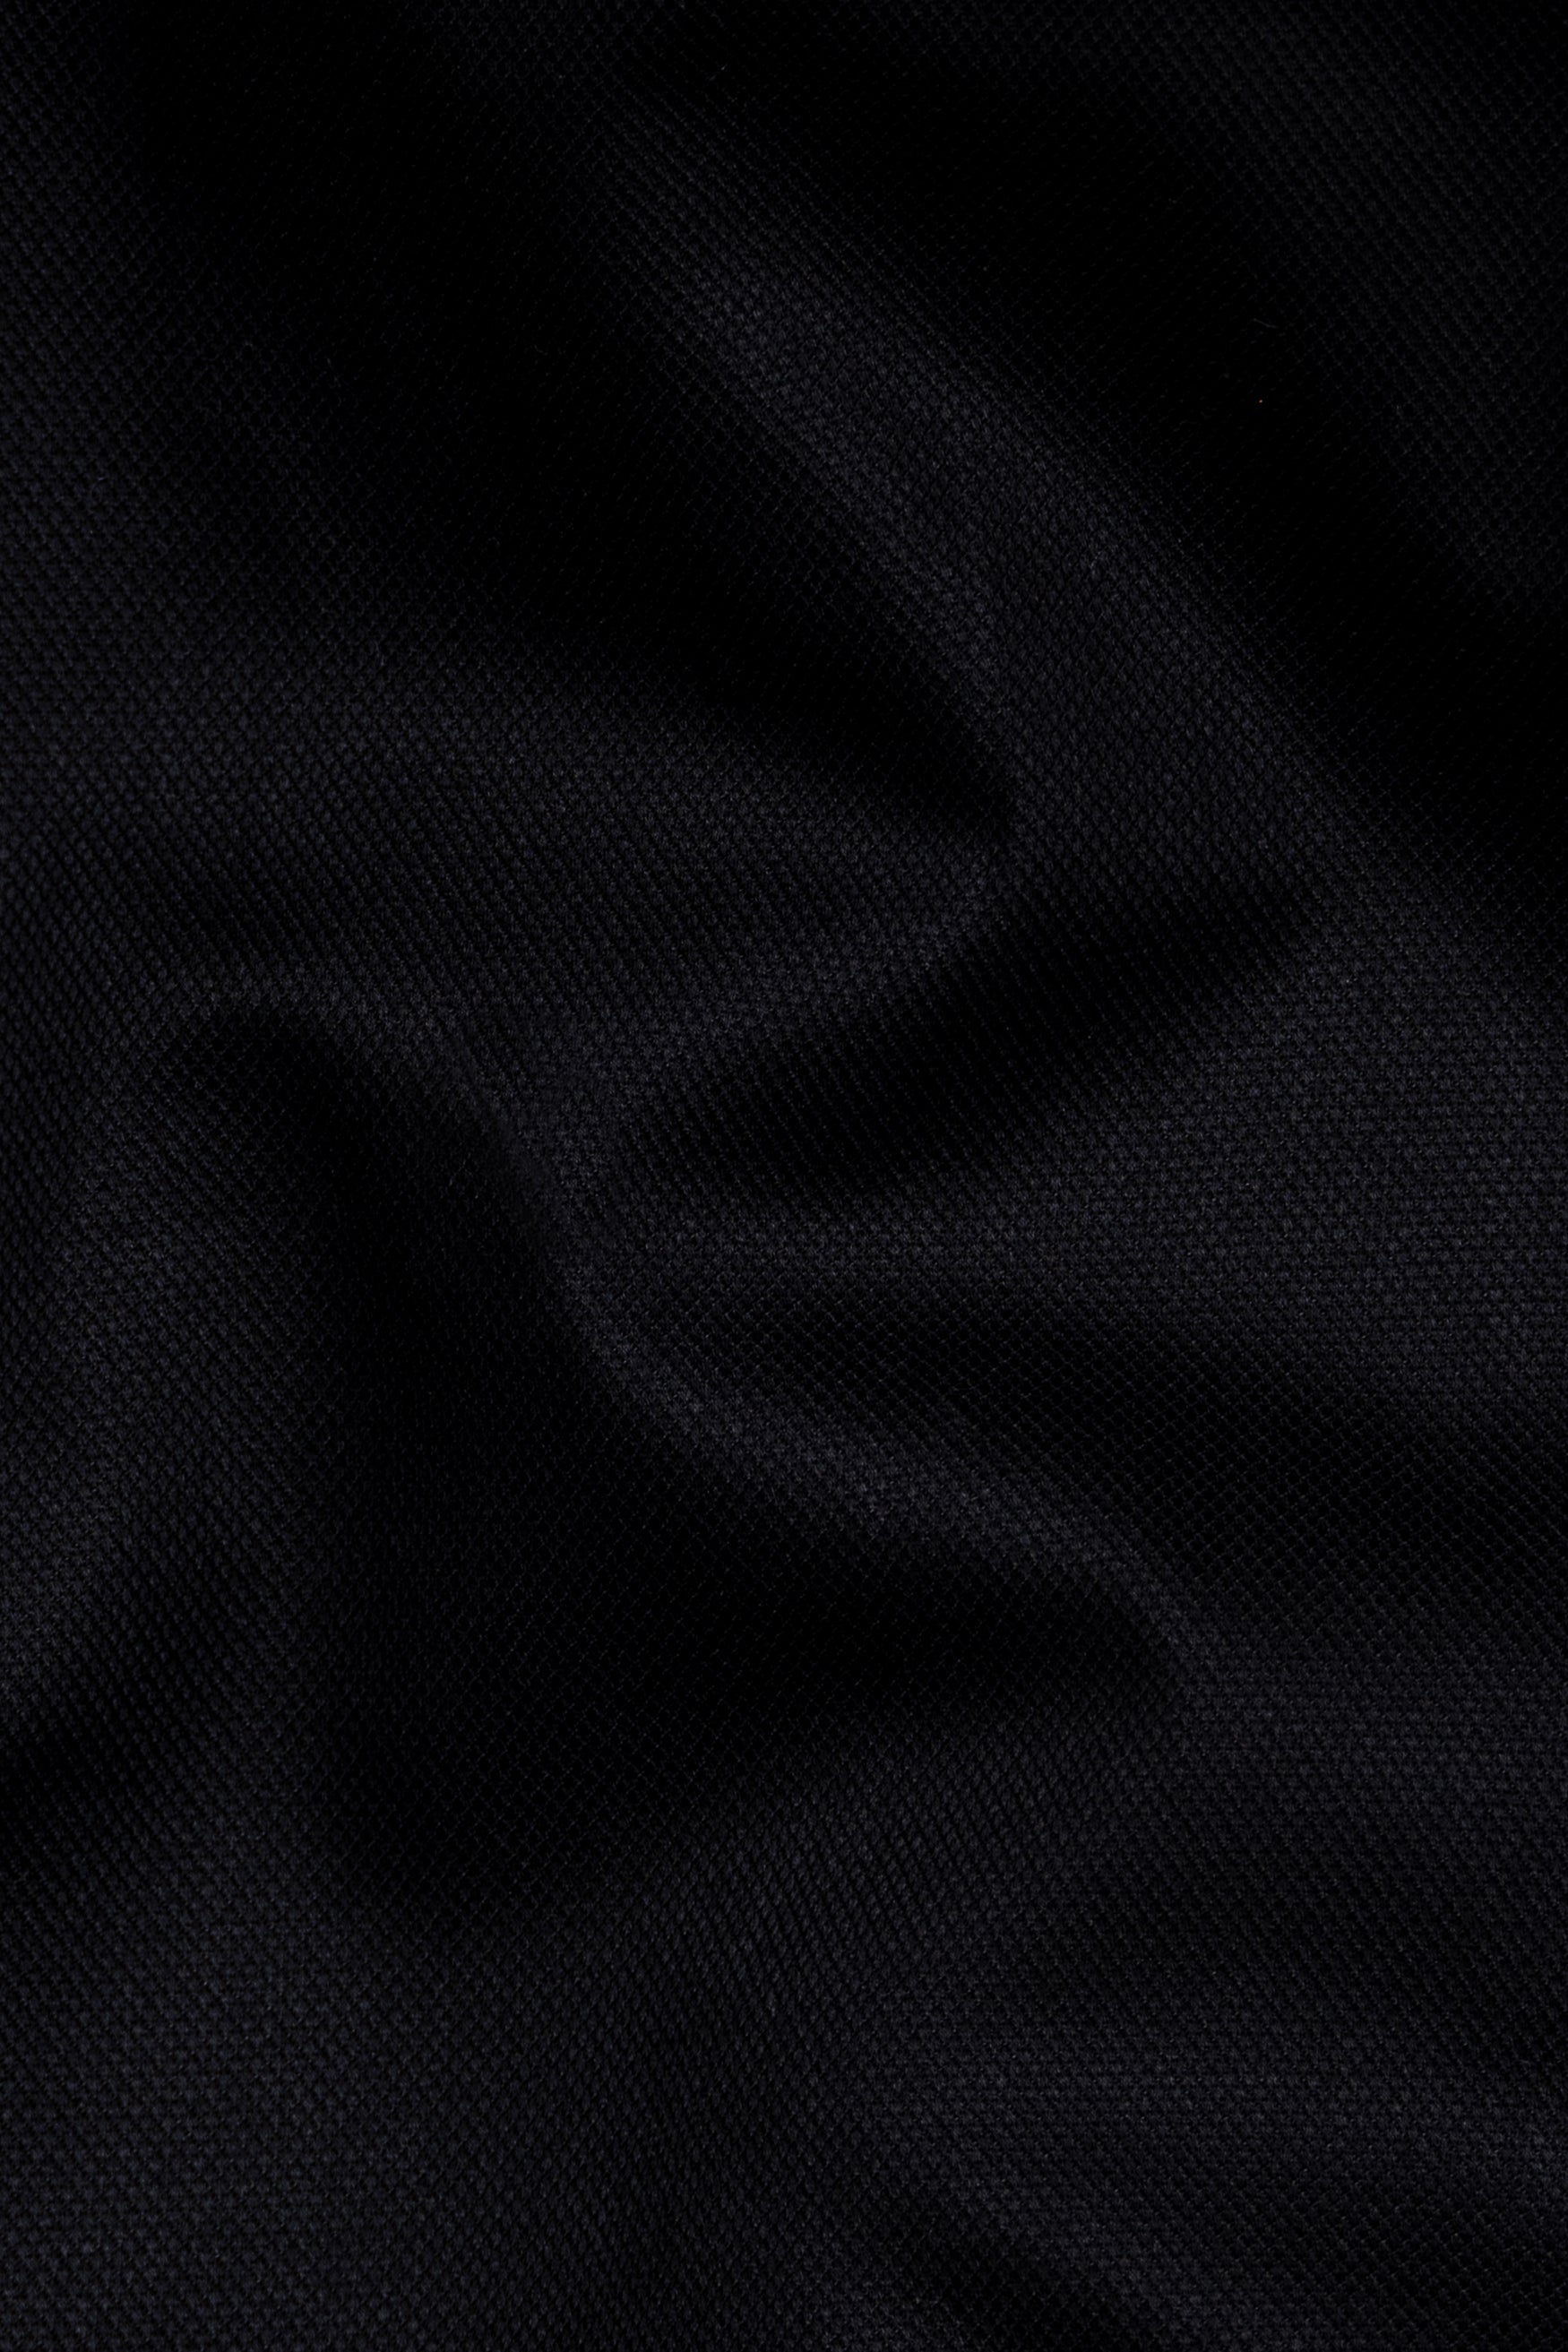 Jade Black Dobby Textured Premium Cotton Shirt